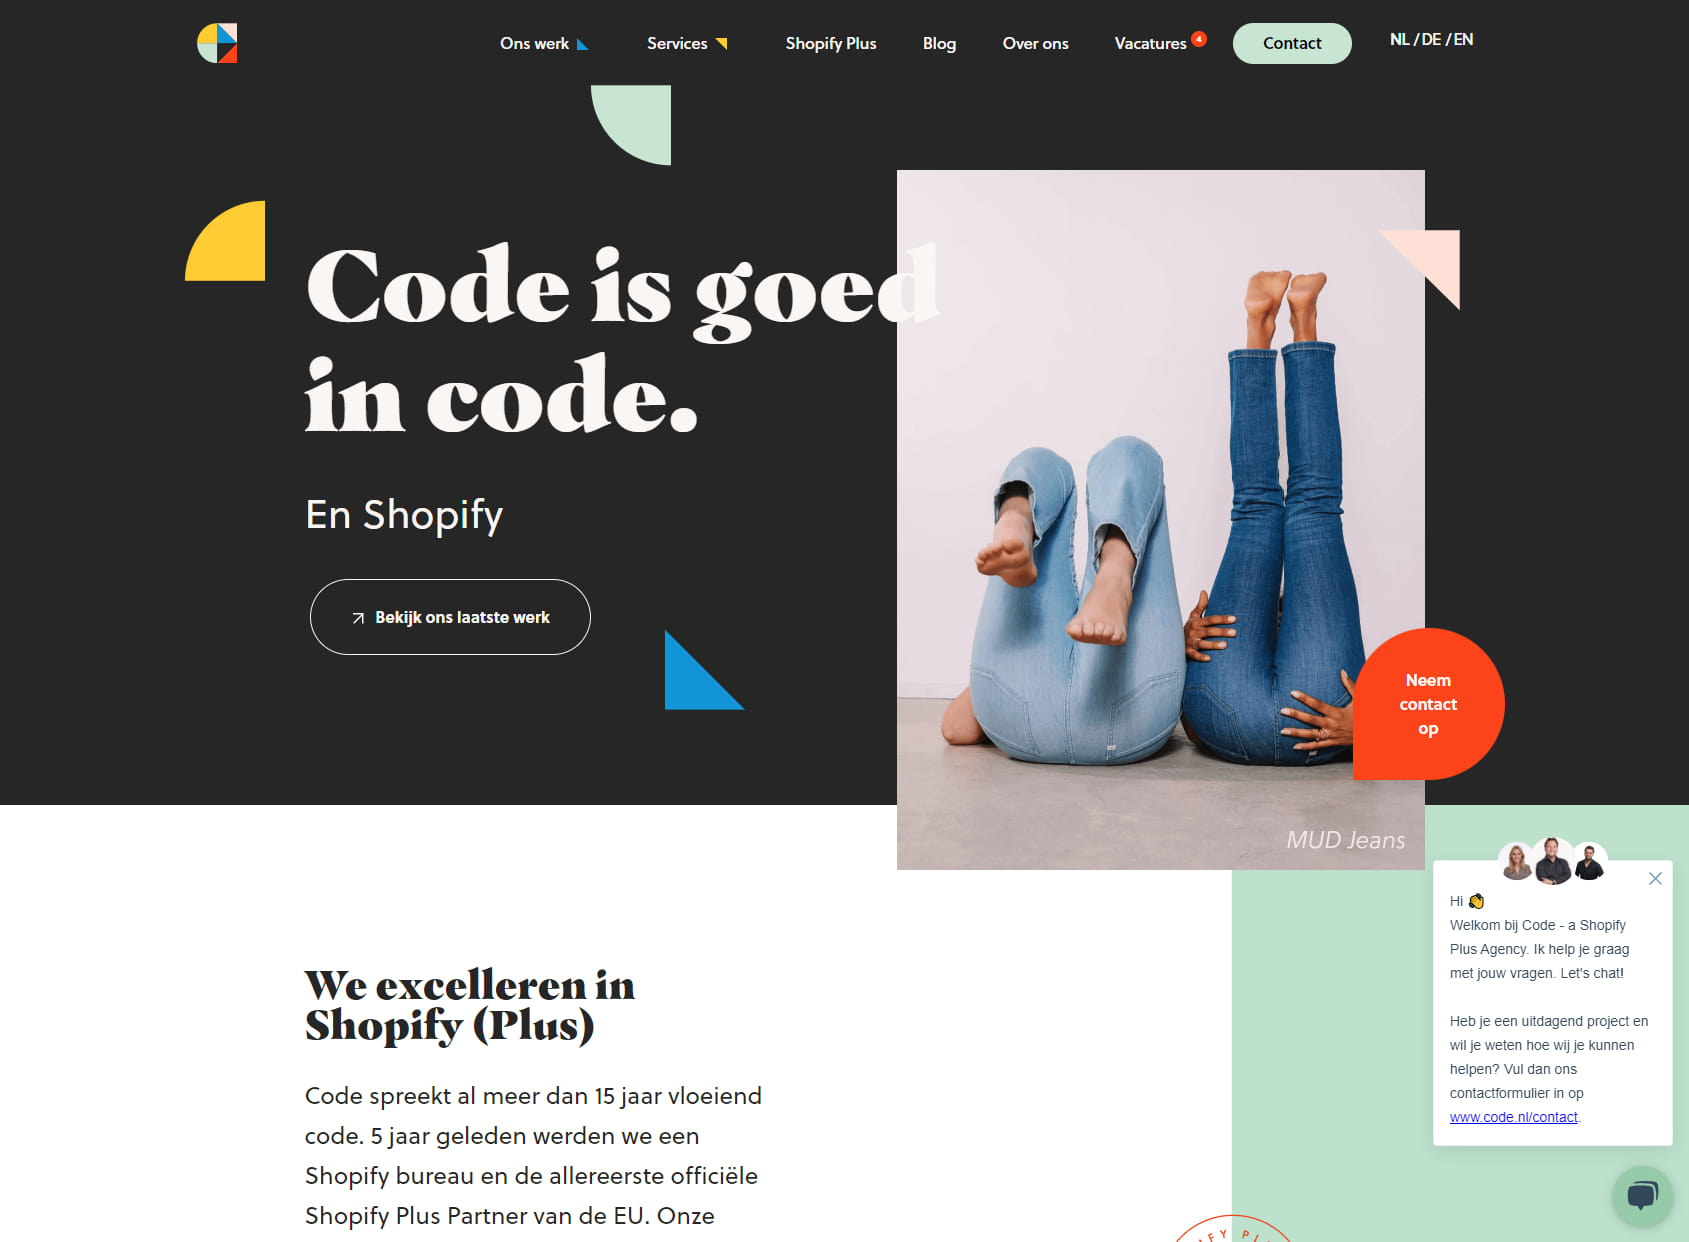 Code, a Shopify Plus agency